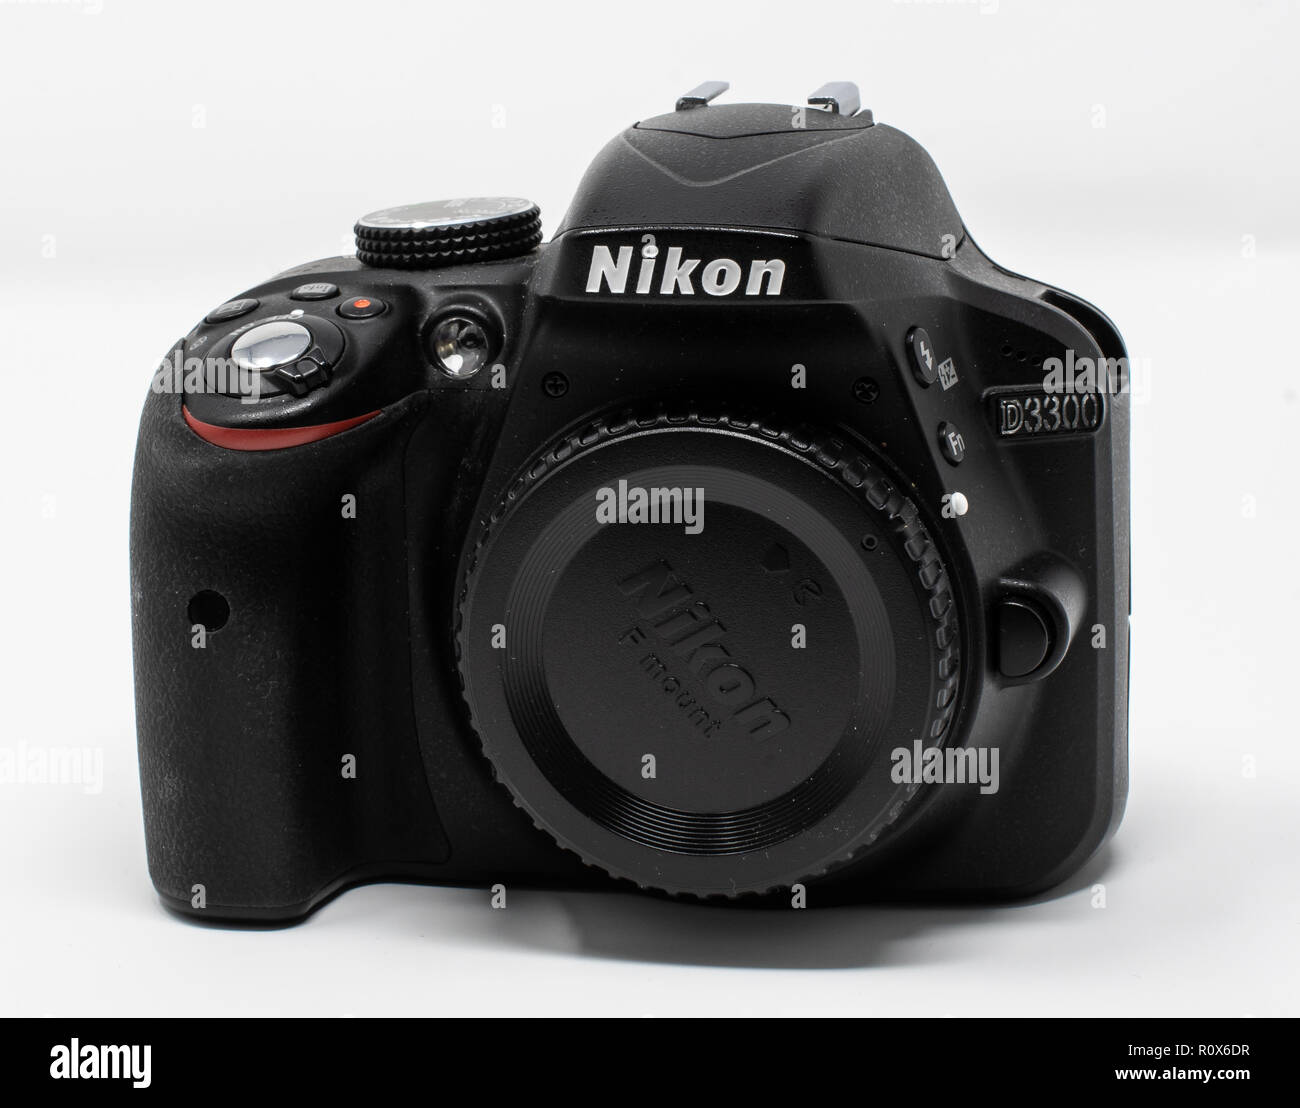 Nikon d3300 hi-res stock photography and images - Alamy